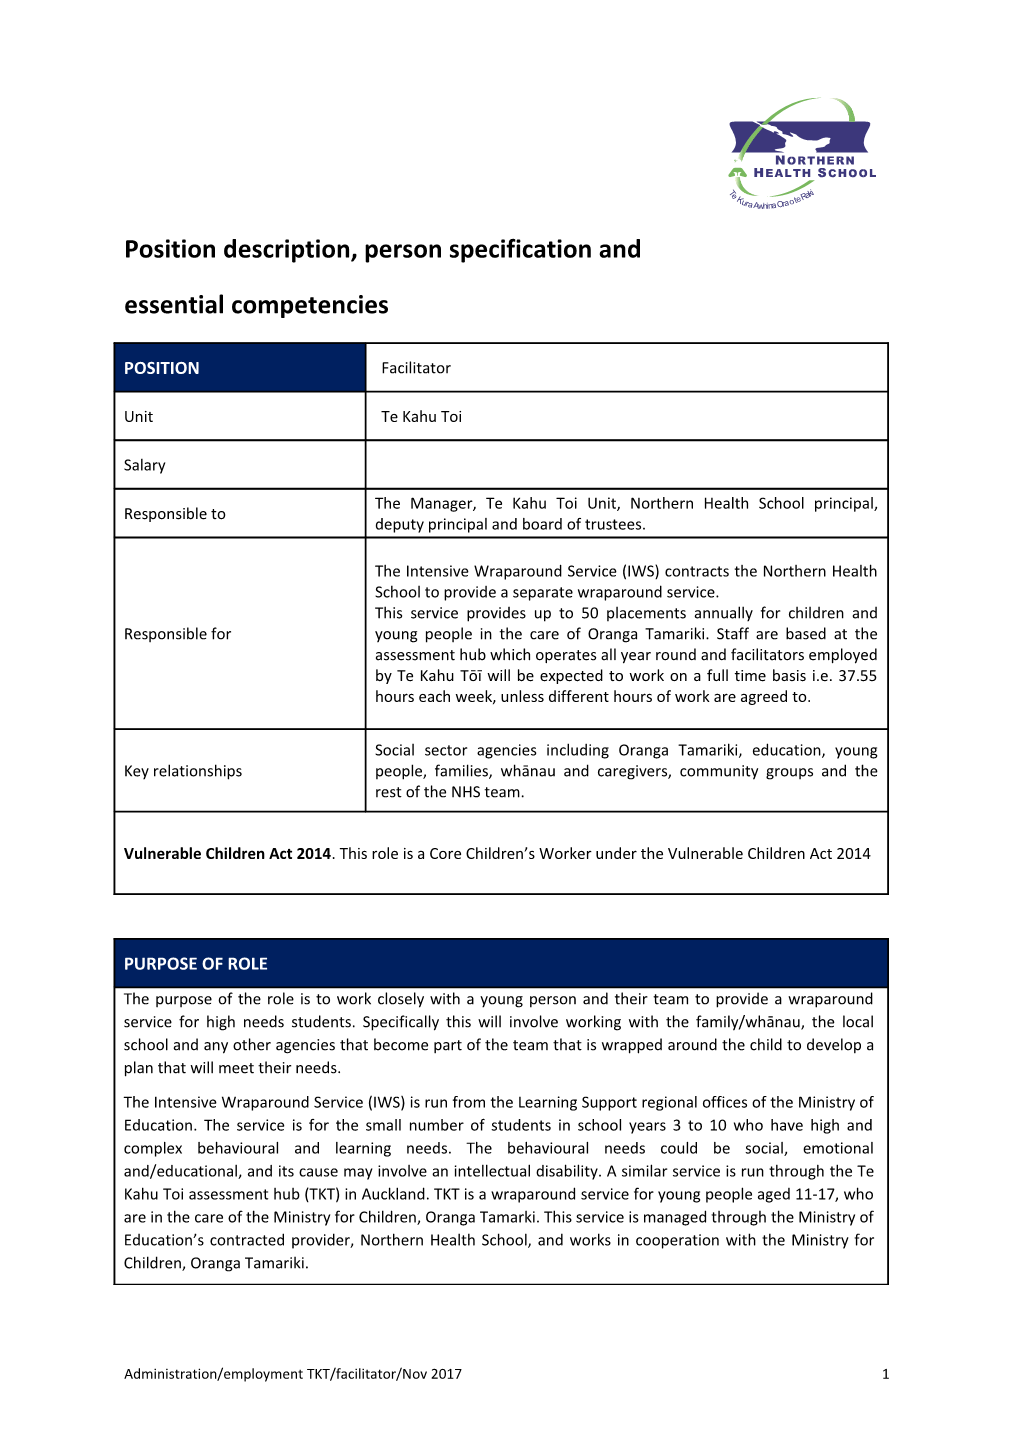 Position Description, Person Specification And